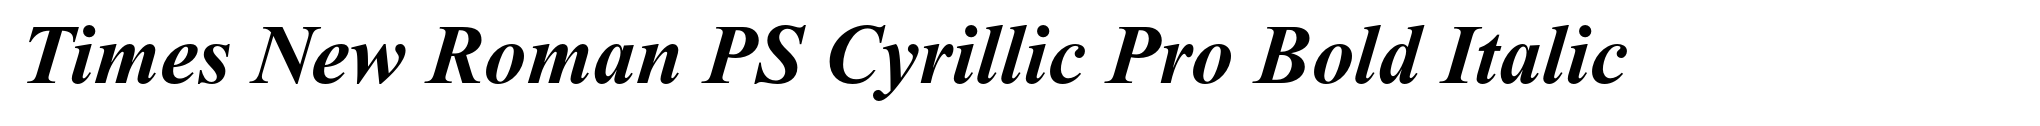 Times New Roman PS Cyrillic Pro Bold Italic image